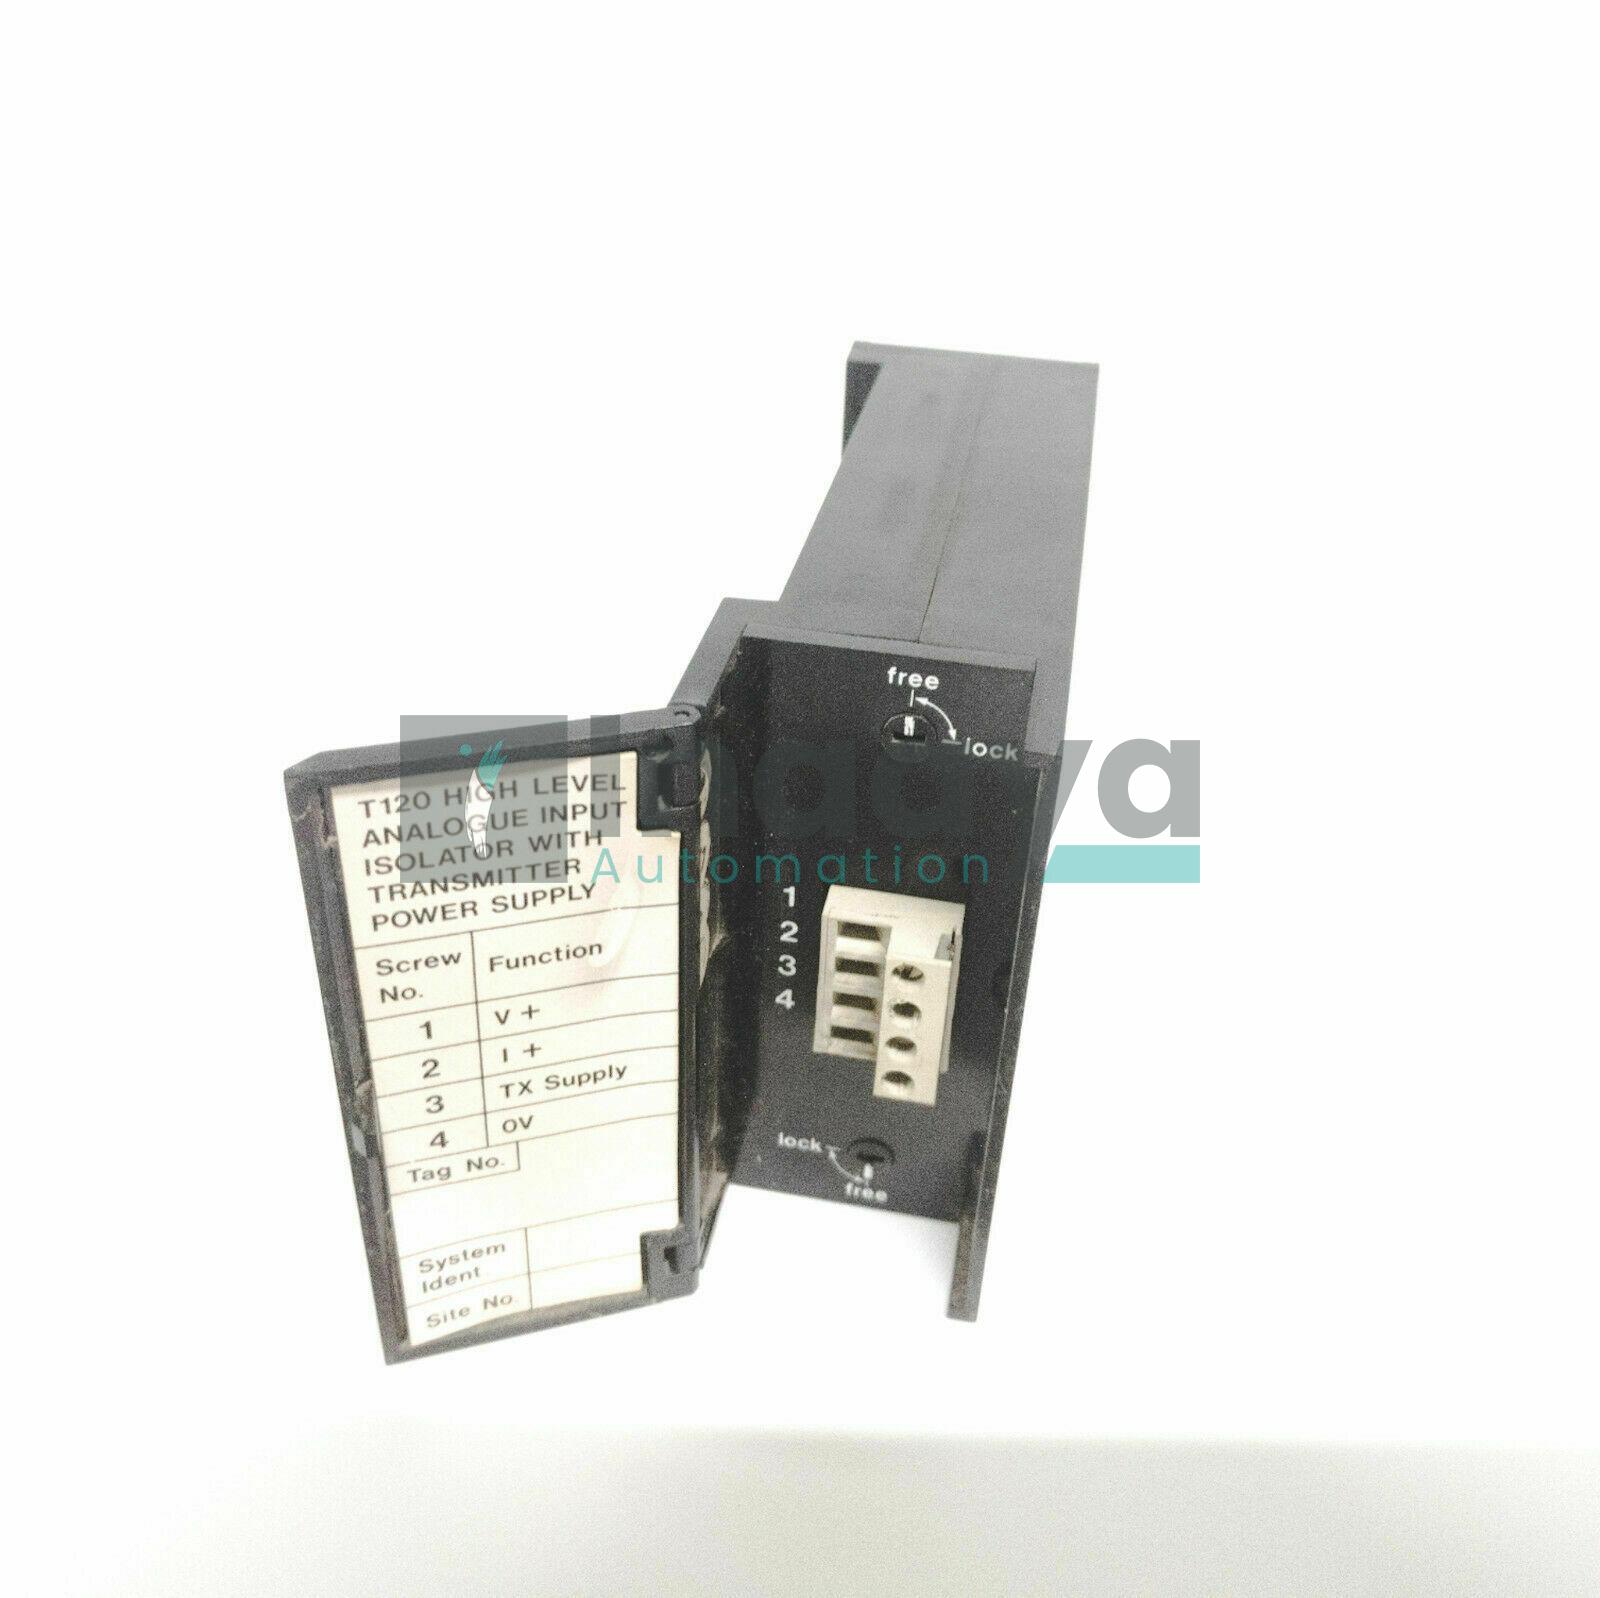 Eurotherm T120 High Level Analogue PLC Input Module